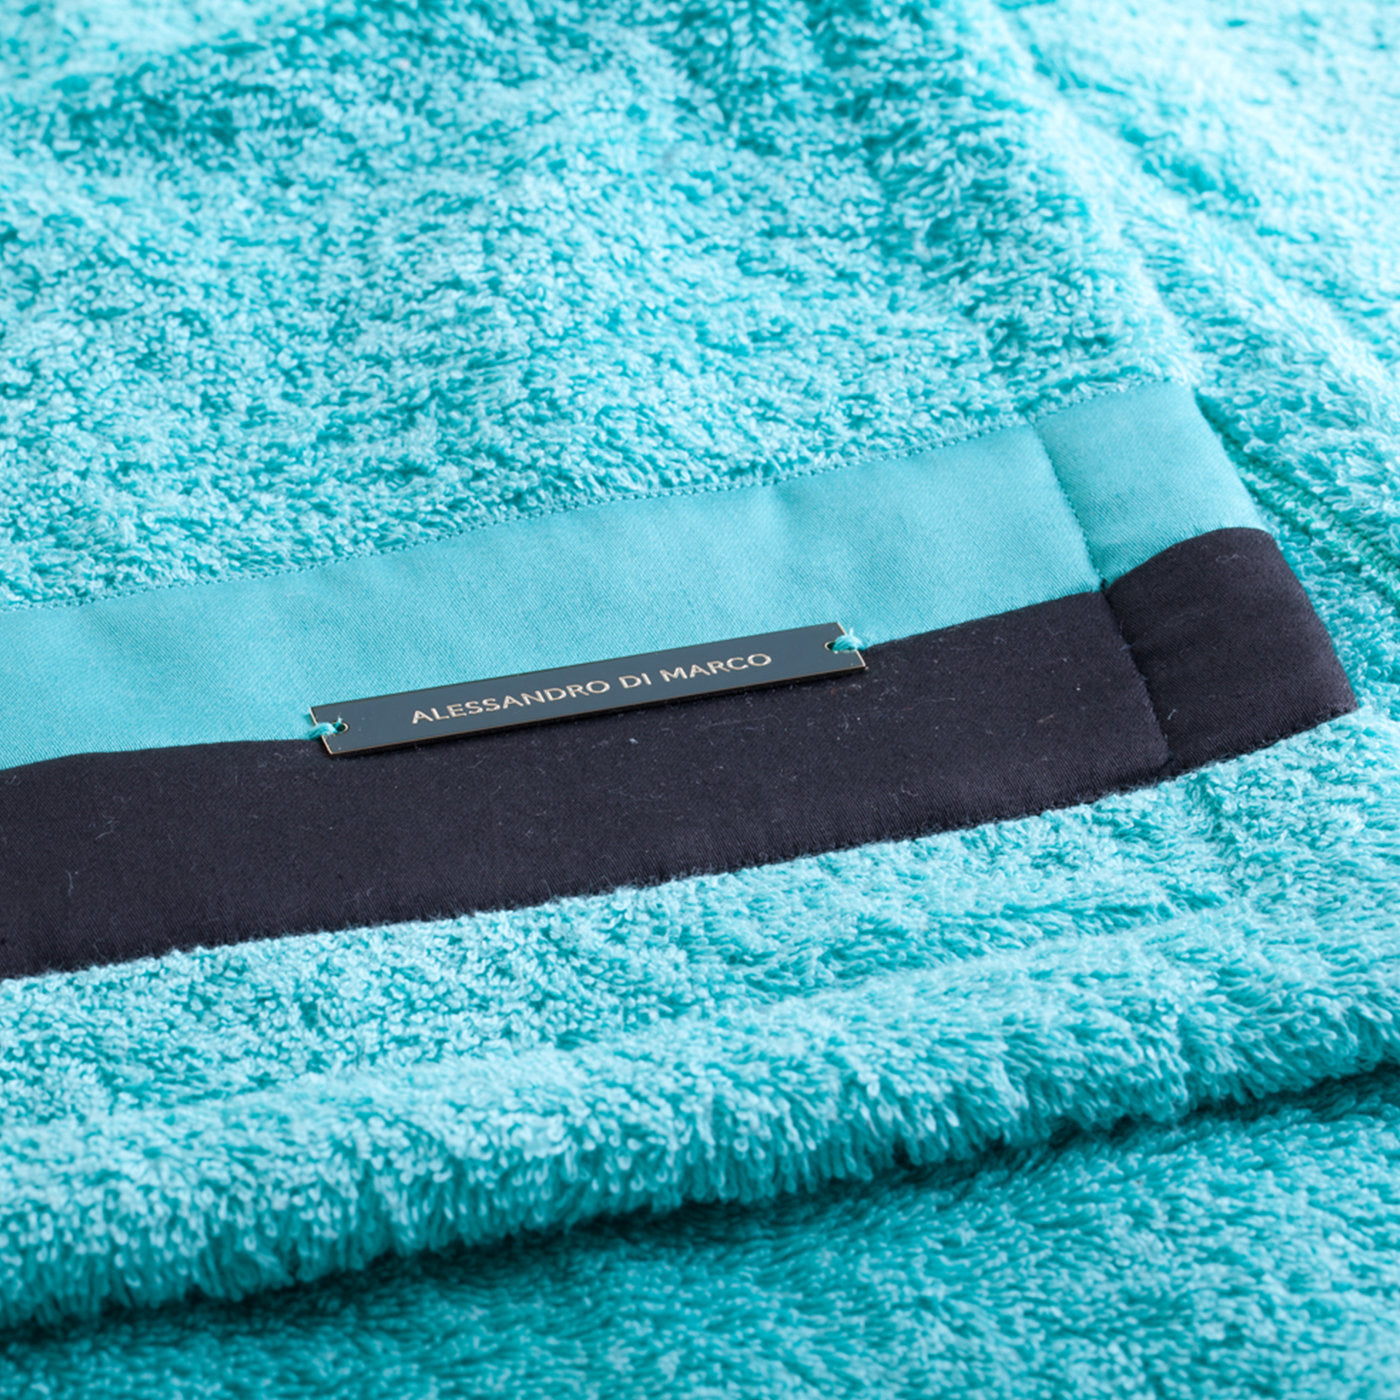 Lot de serviettes de bain grand format - Teal and Black - Vue alternative 1